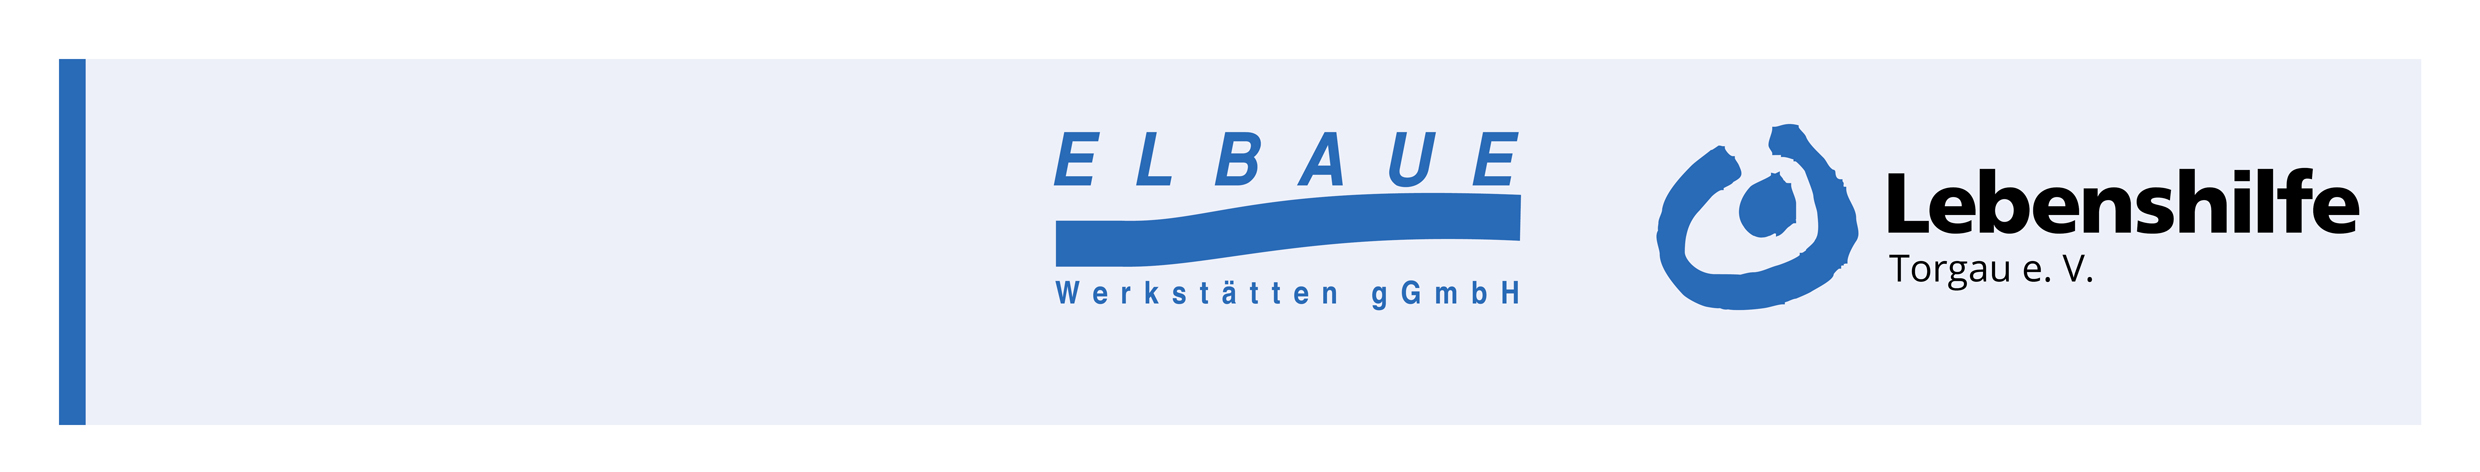 Logo Elbauenwerkstätten